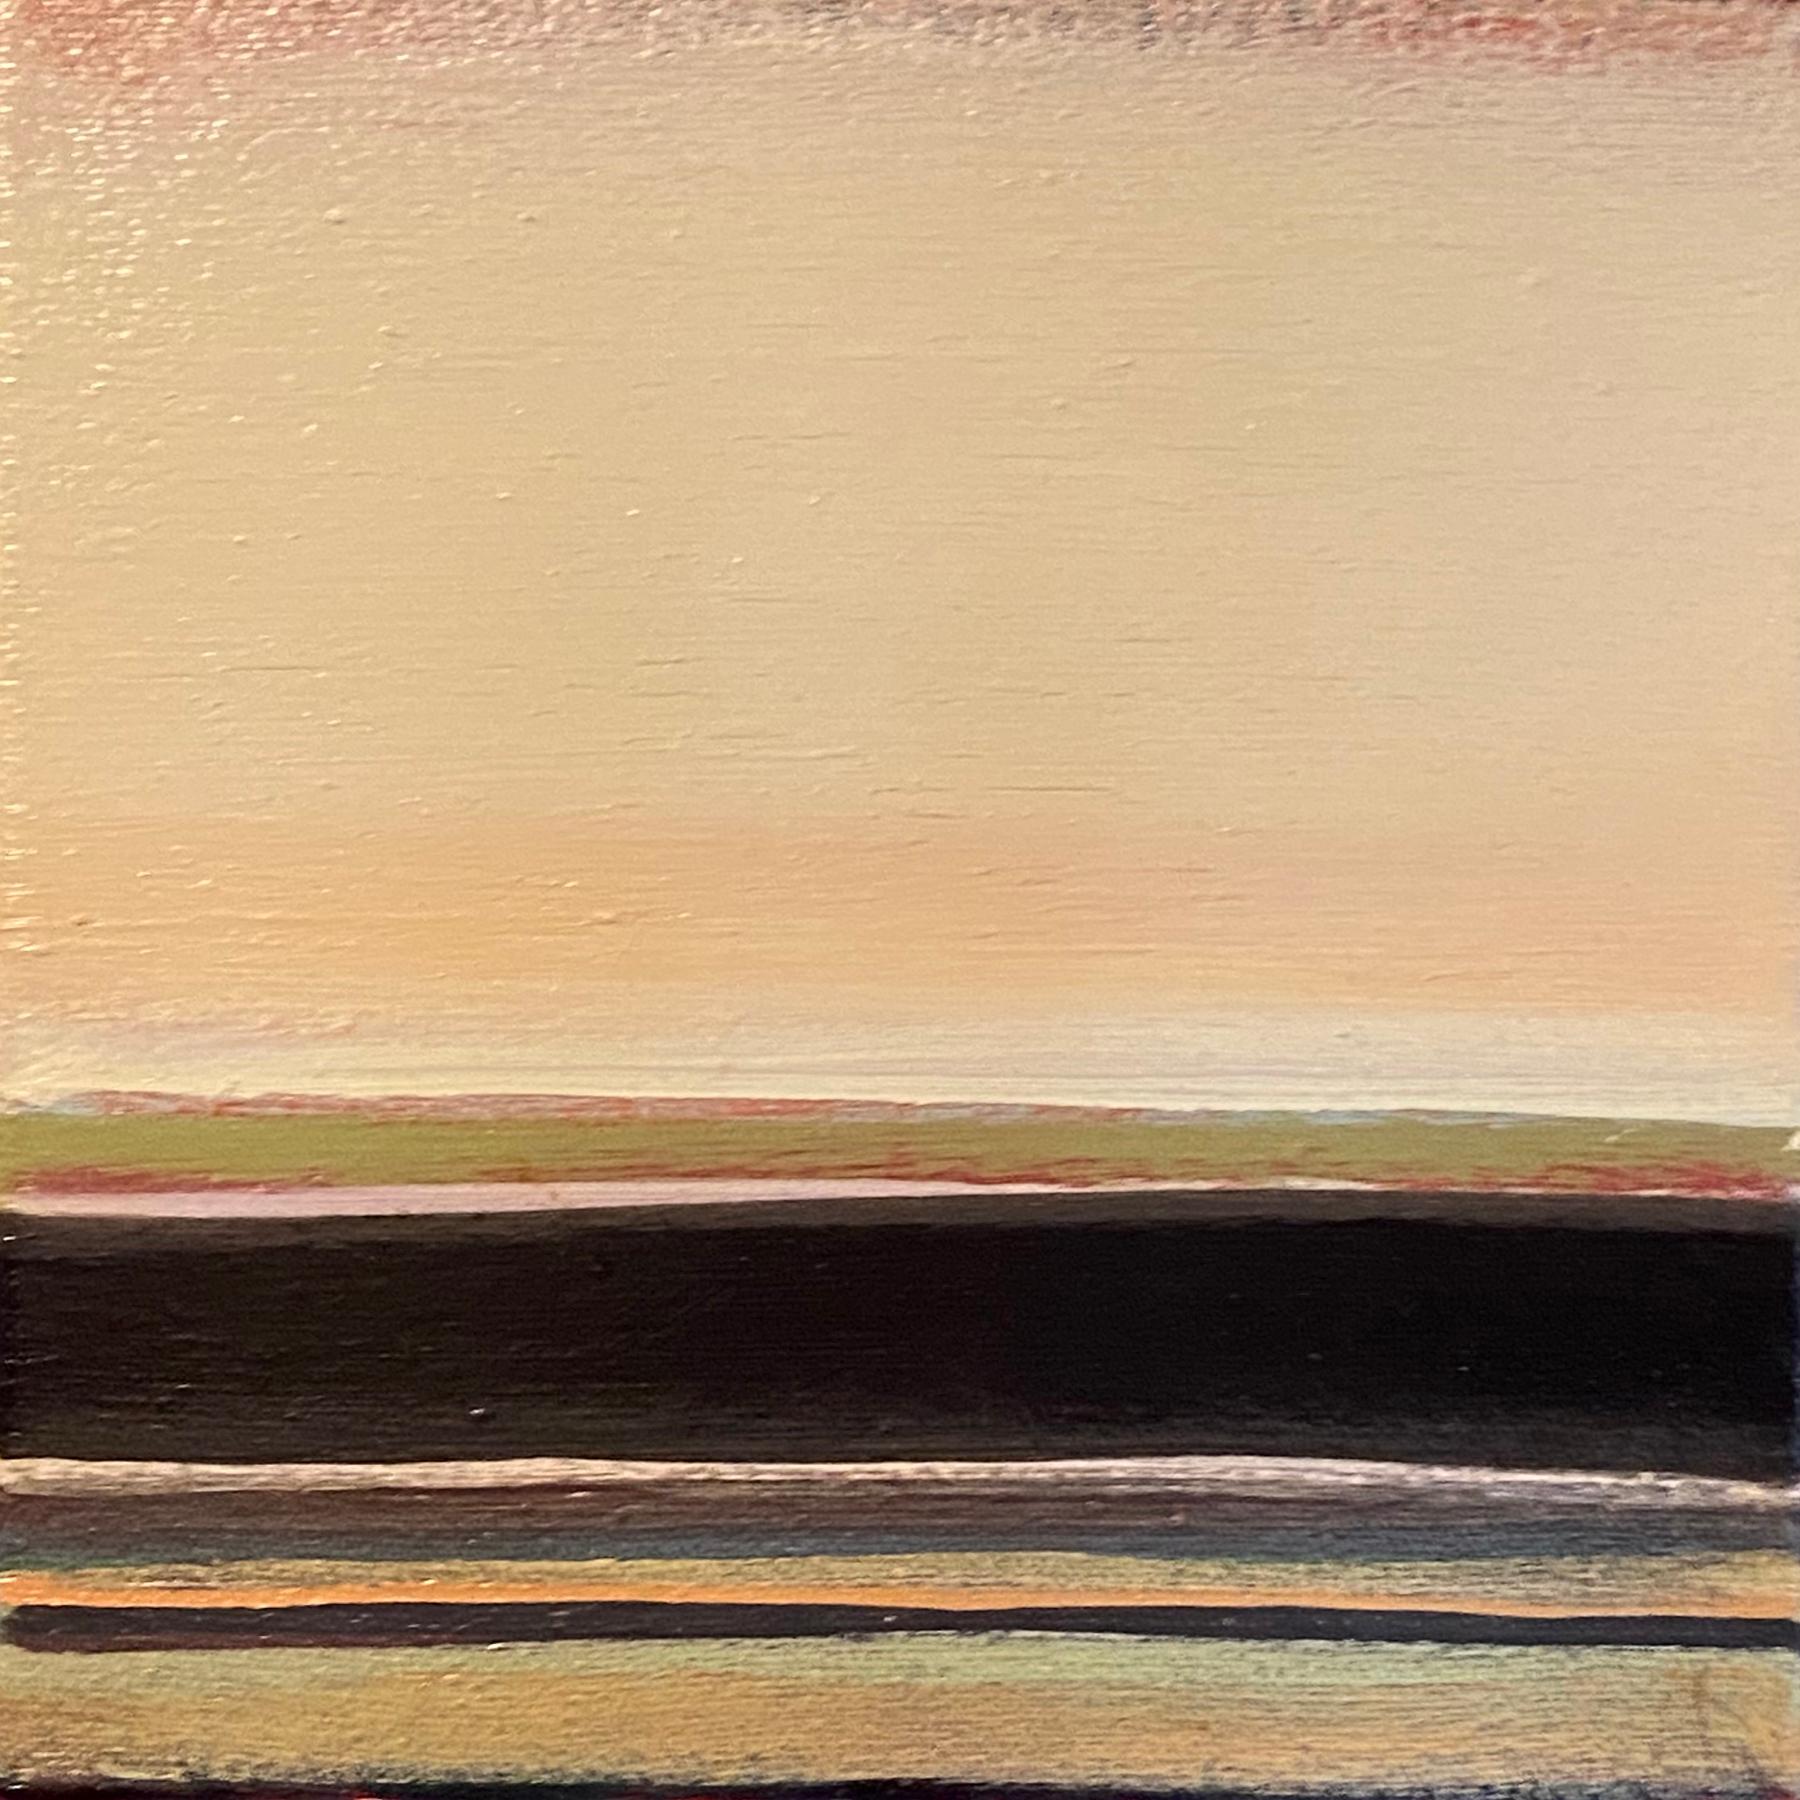 Alyson Kinkade Landscape Painting - Remembering Plains no. 14